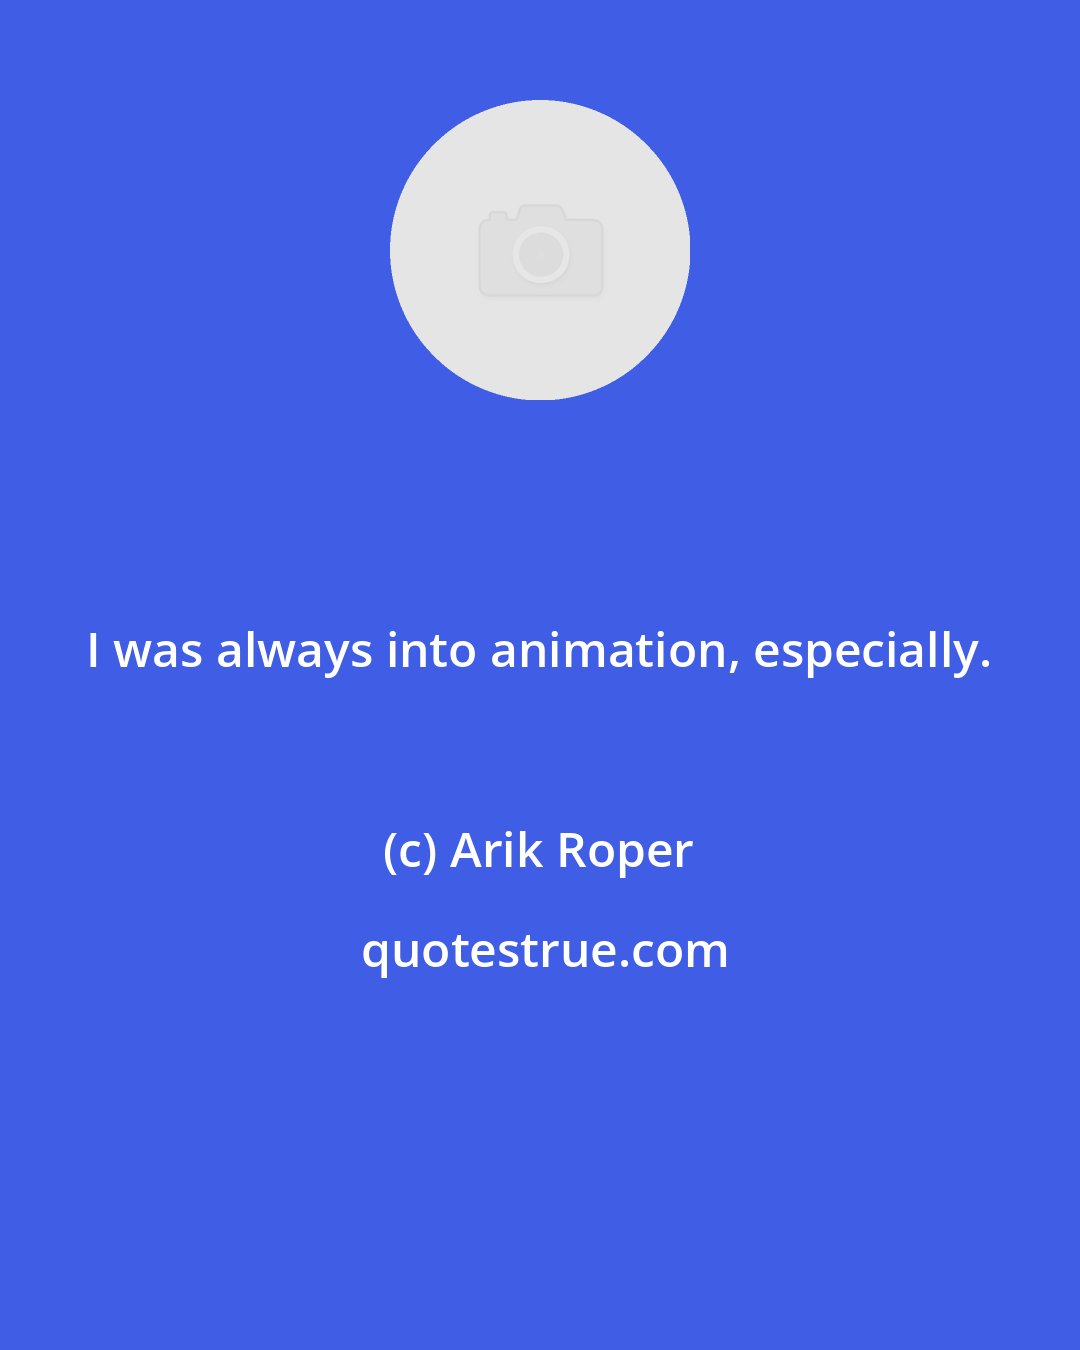 Arik Roper: I was always into animation, especially.